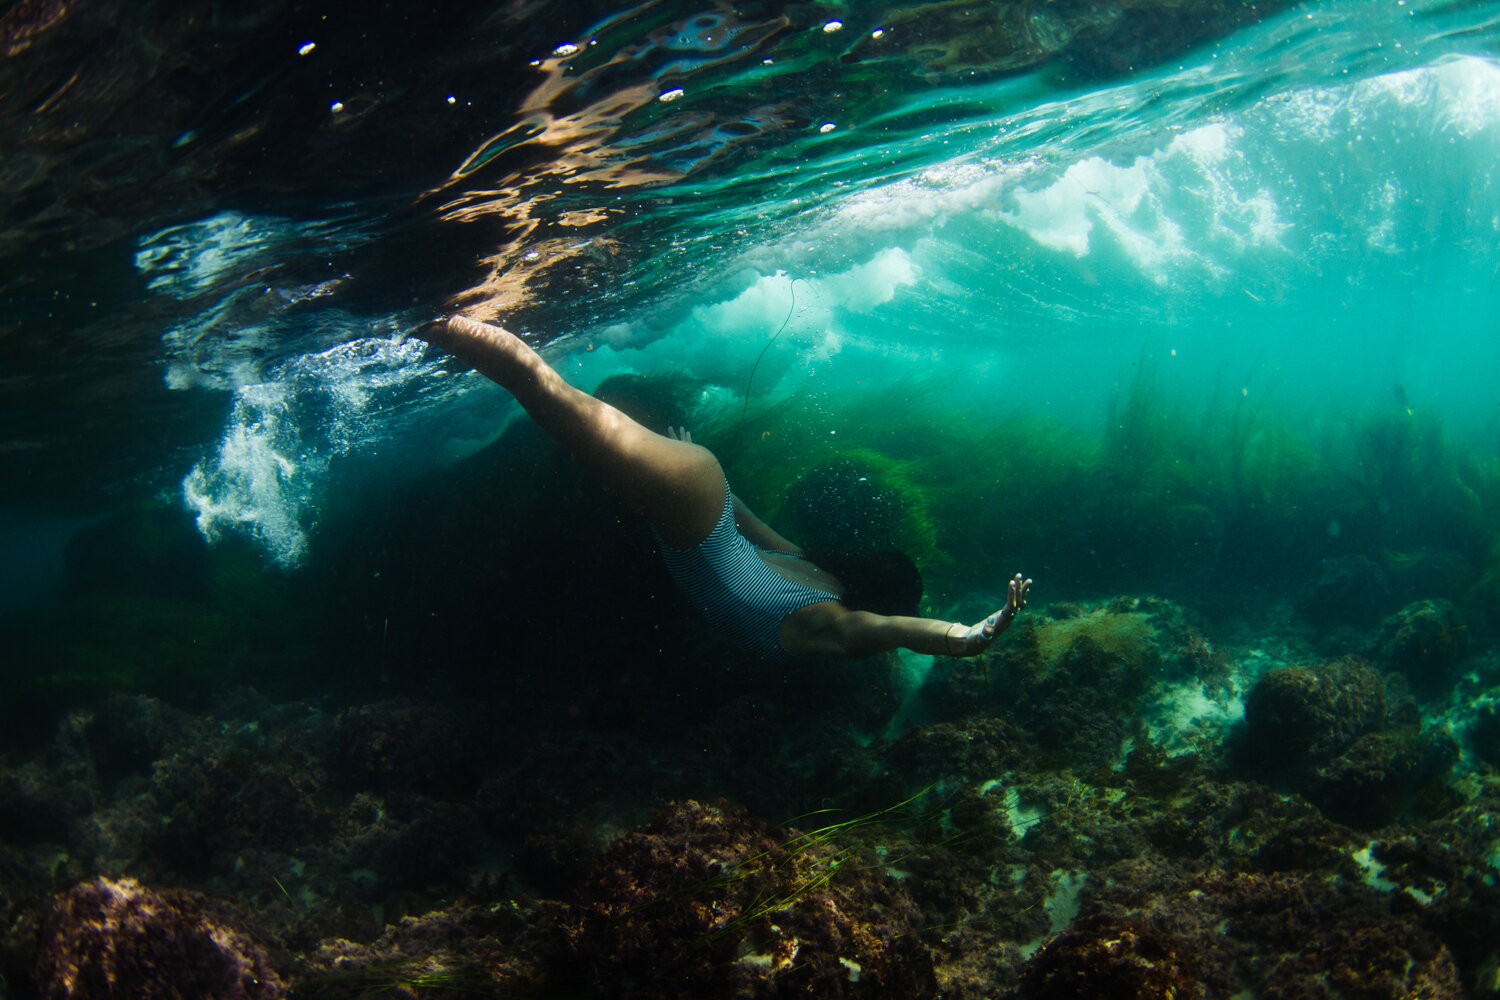 California Laguna beach underwater ocean sea lifestyle surf photographer Krista Espino-15.jpg